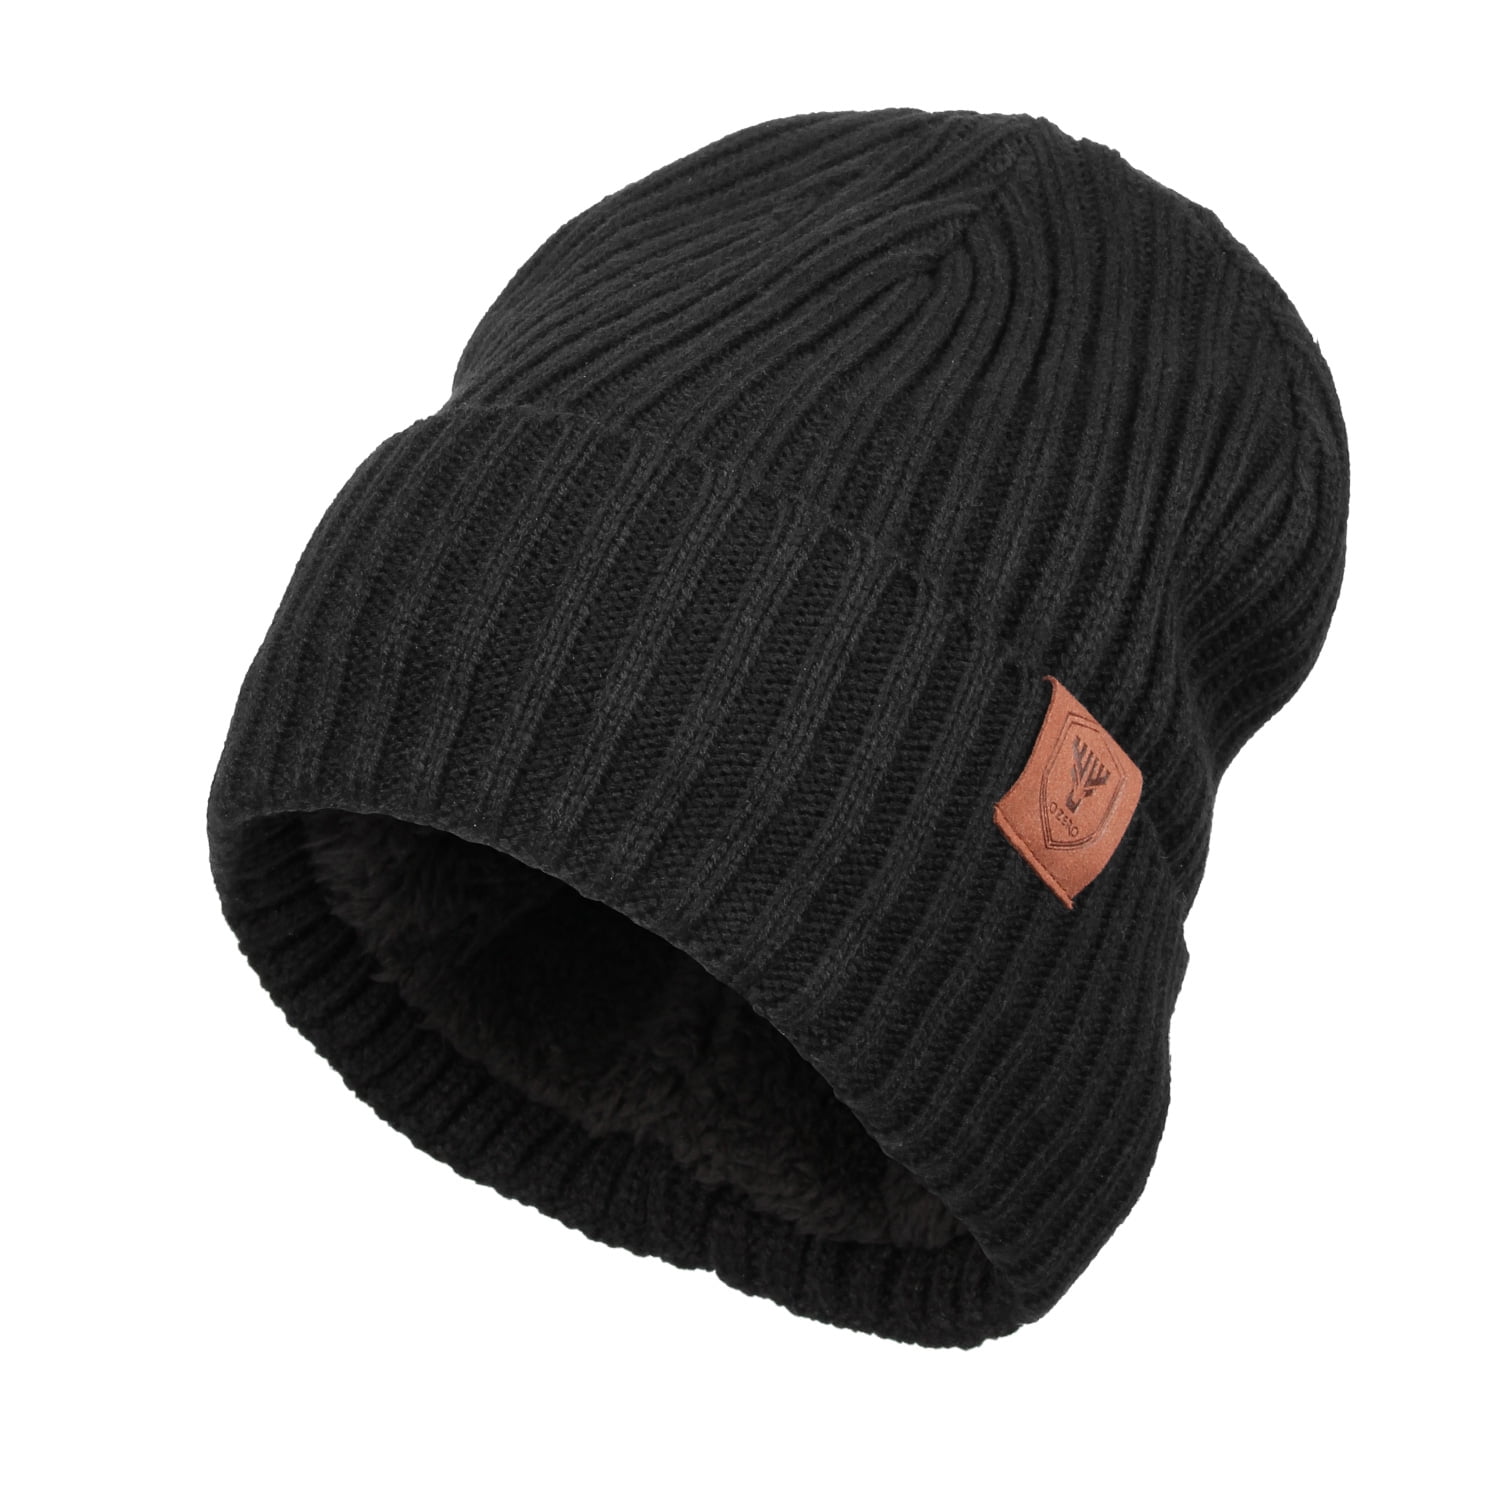 Beanie Polar Fleece Black Warm Thermal Winter Cap Hat Work Ski One Size Fits 